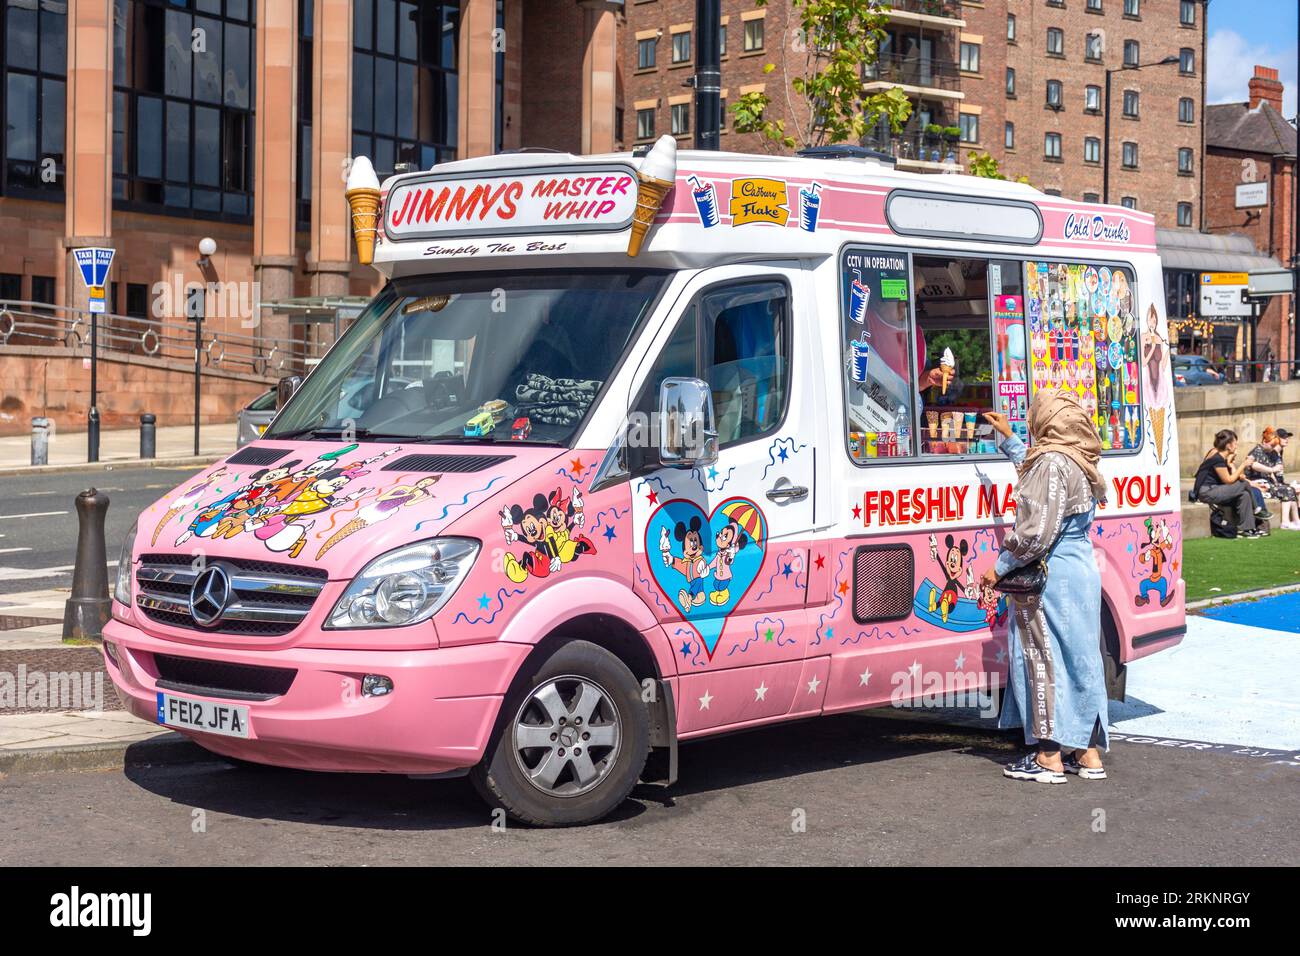 Jimmy's Master Whip ice cream van, Quayside, Newcastle upon Tyne, Tyne and Wear, England, United Kingdom Stock Photo